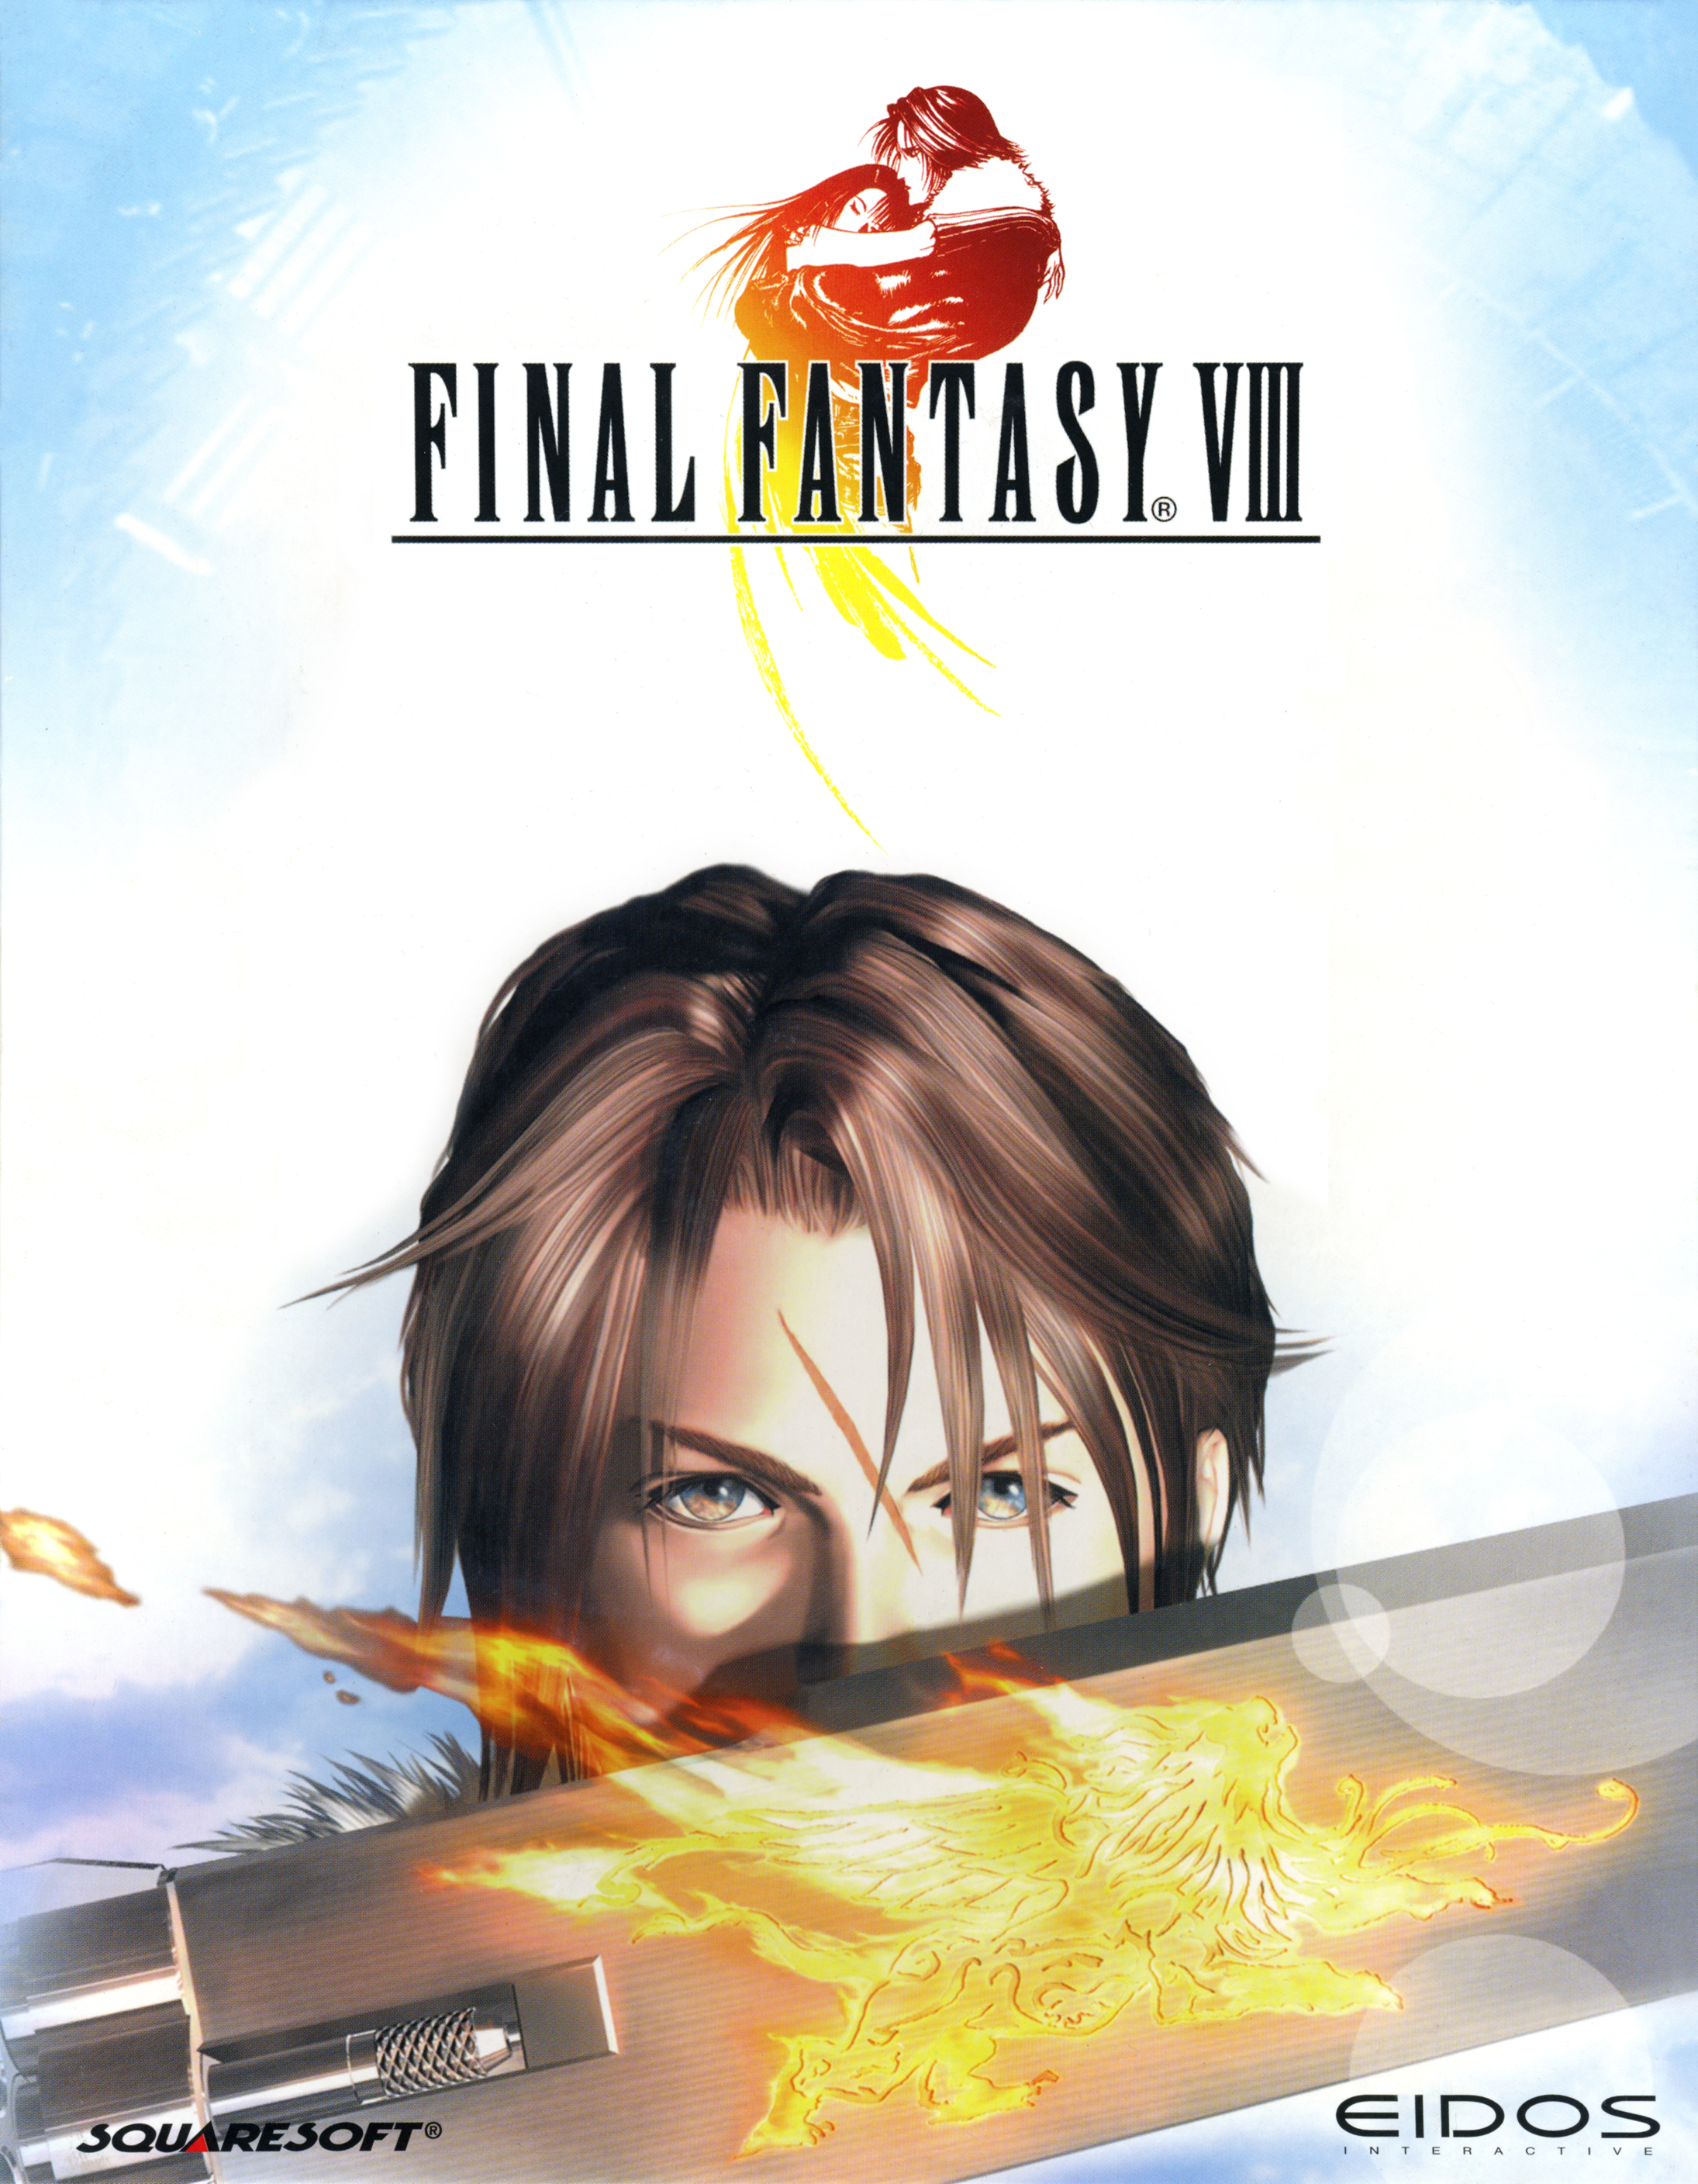 Final Fantasy Viii Poster 2190x2816 Wallpaper Teahub Io